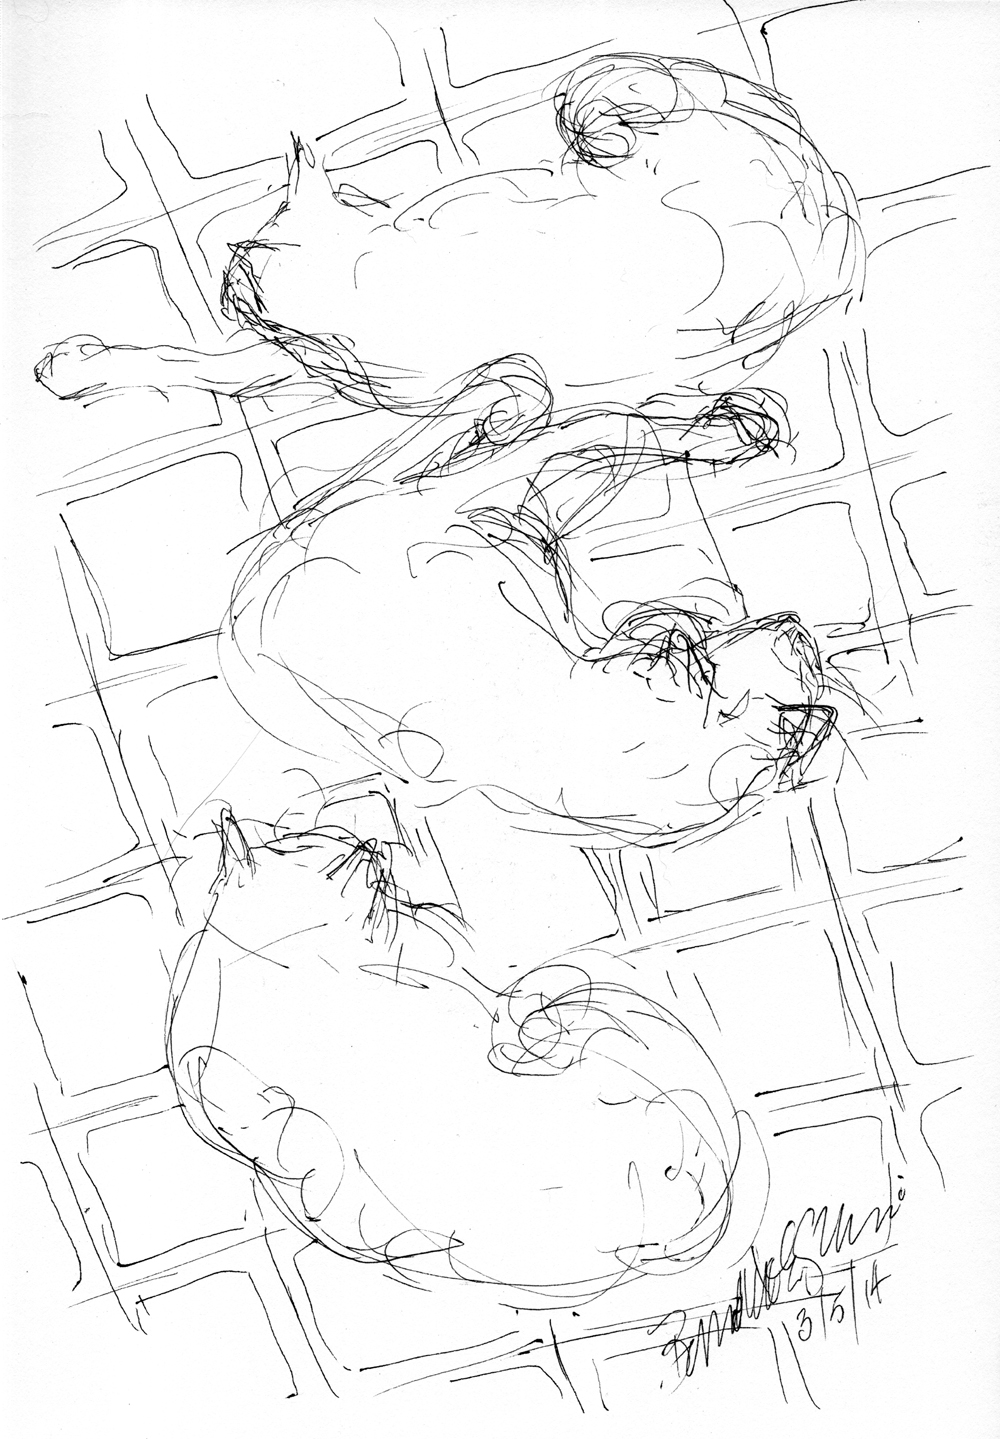 ink sketch of three cats on floor